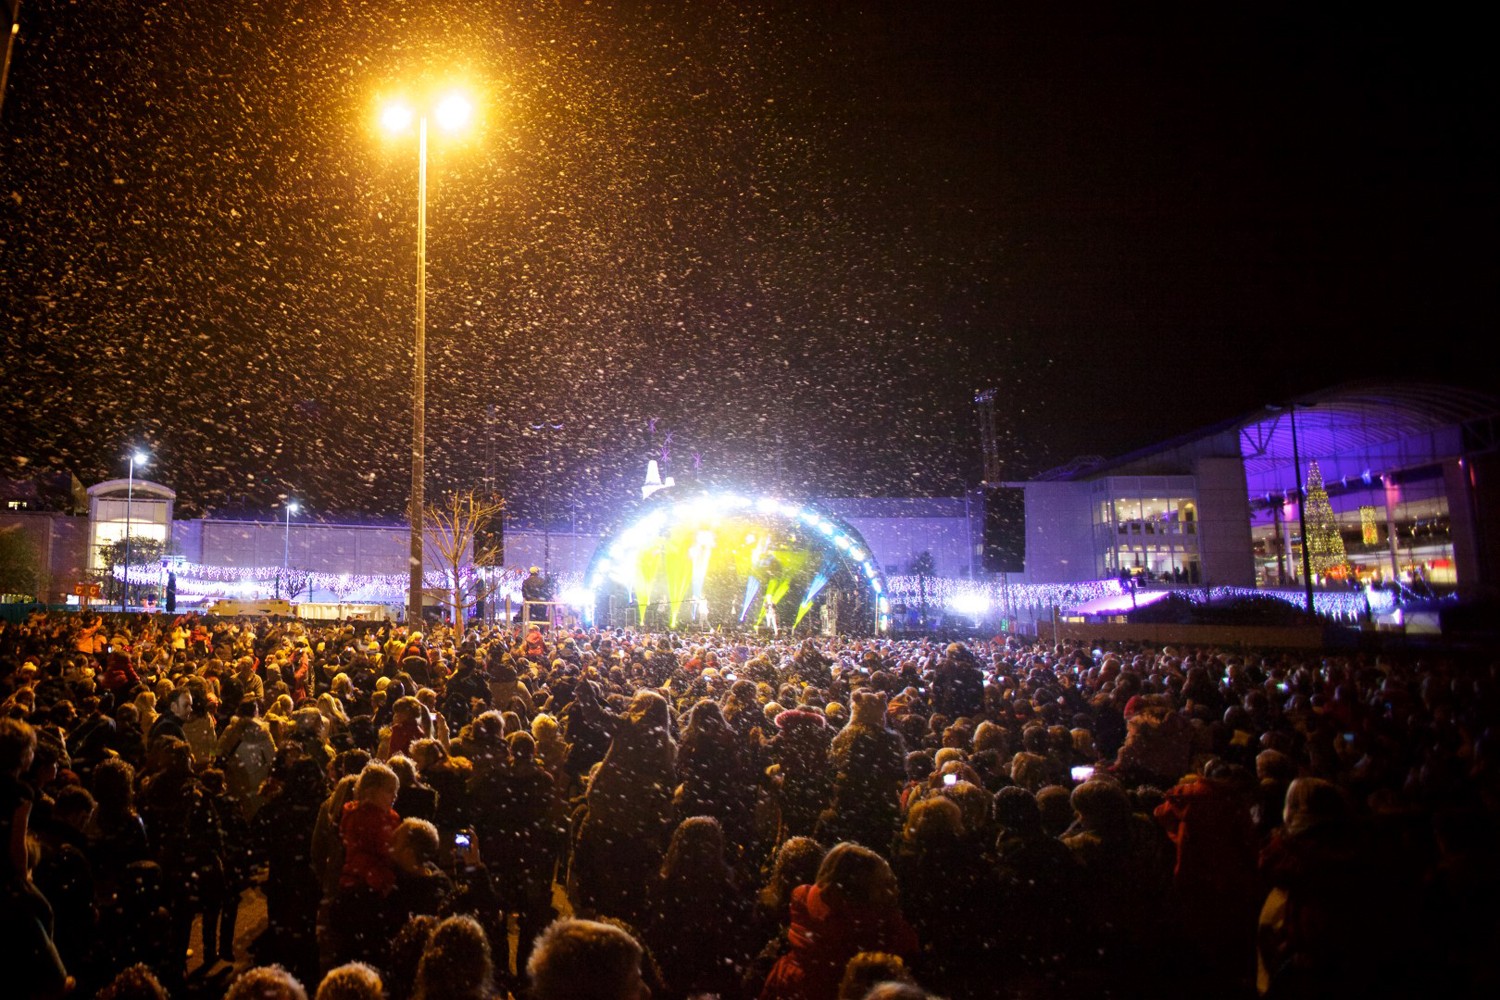 Cribbs Causeway Winter Dressing, Falling Snow Machine Hire UK from FX Live